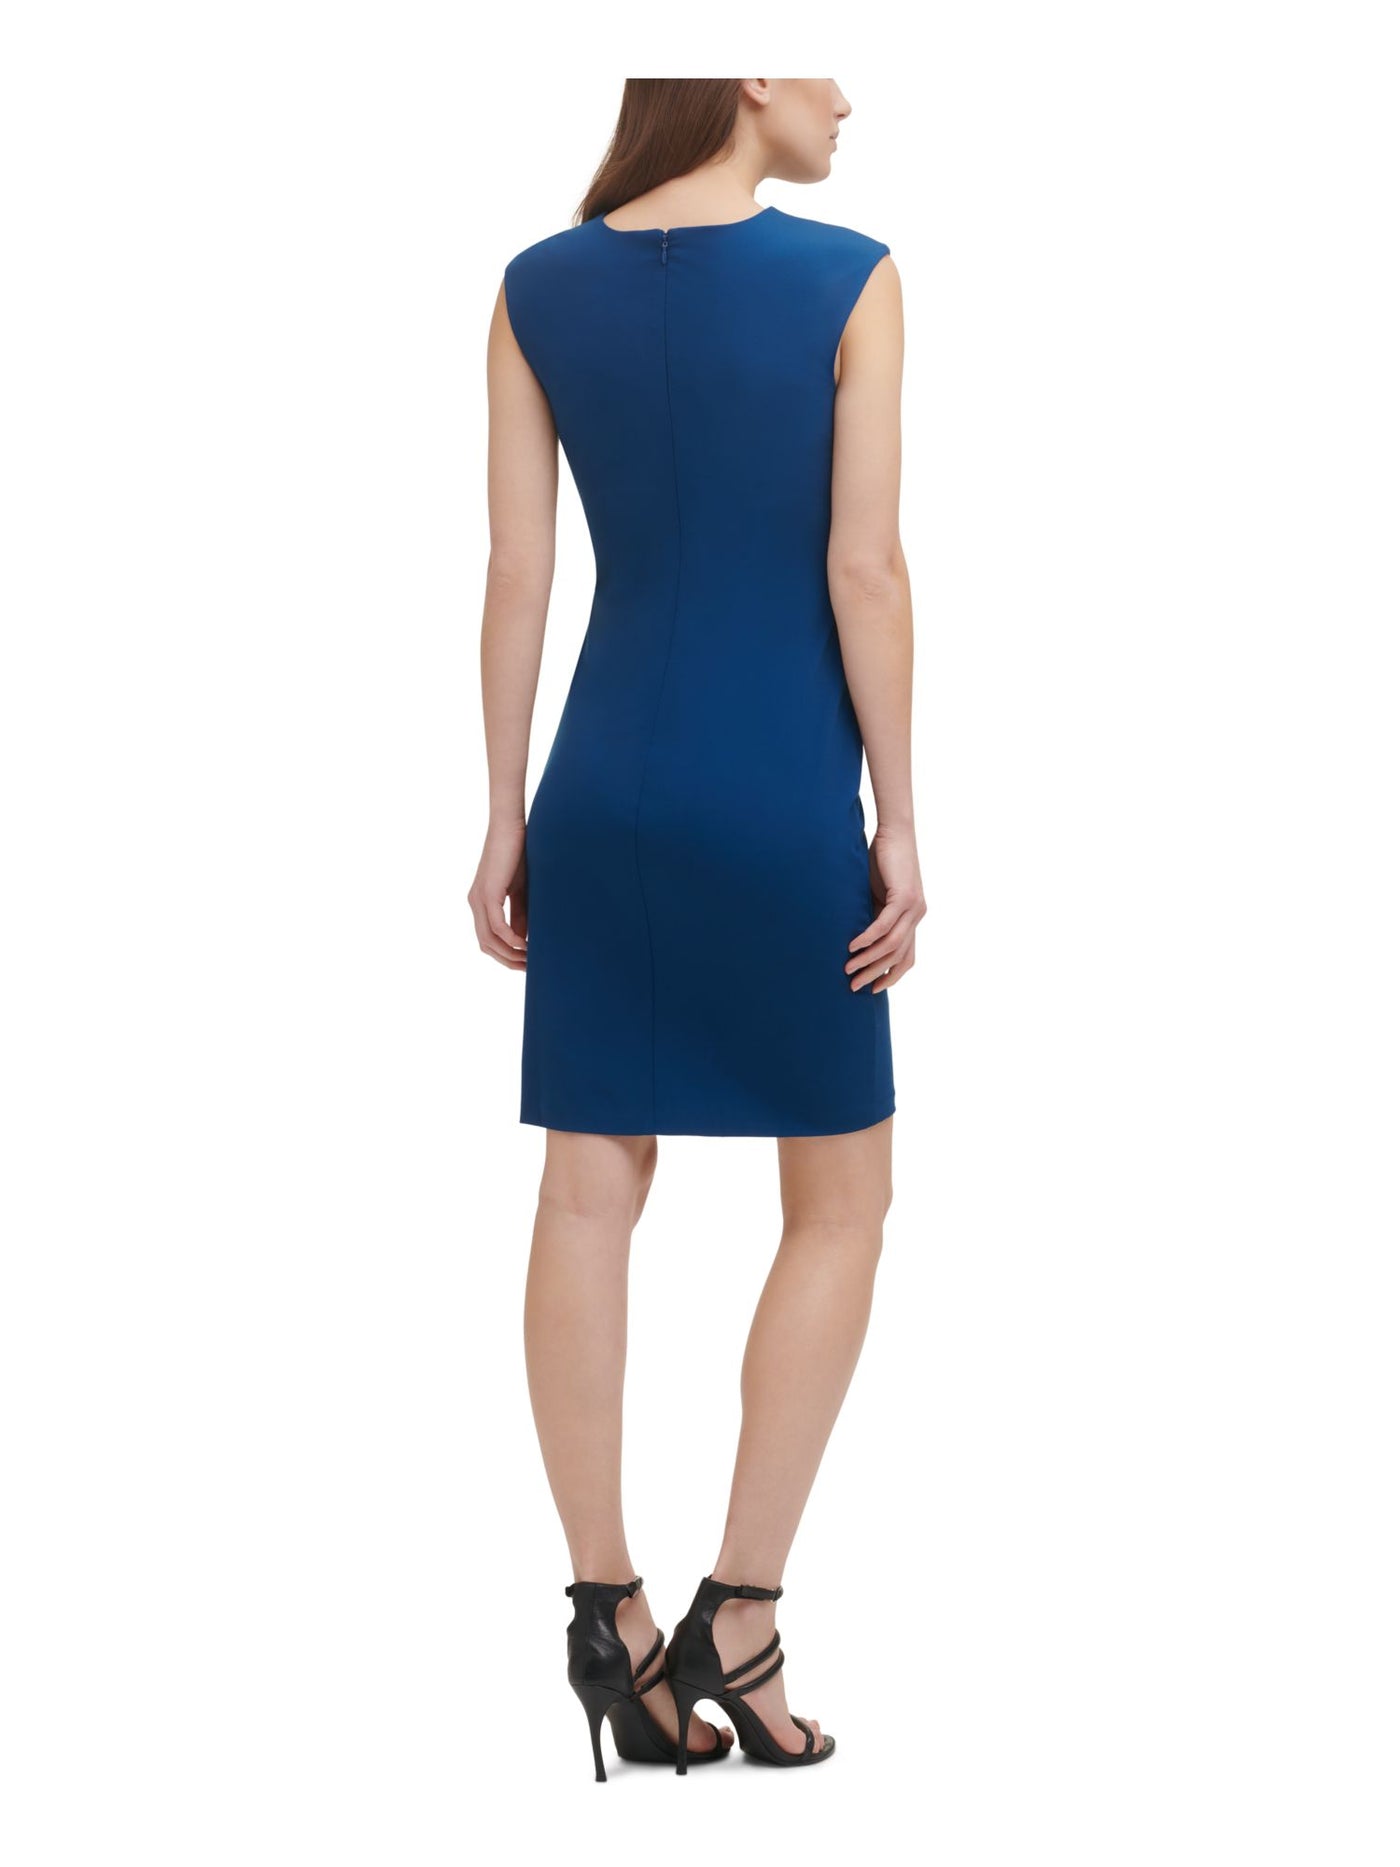 DKNY Womens Blue Zippered Side-knot Sleeveless Round Neck Above The Knee Cocktail Sheath Dress 2